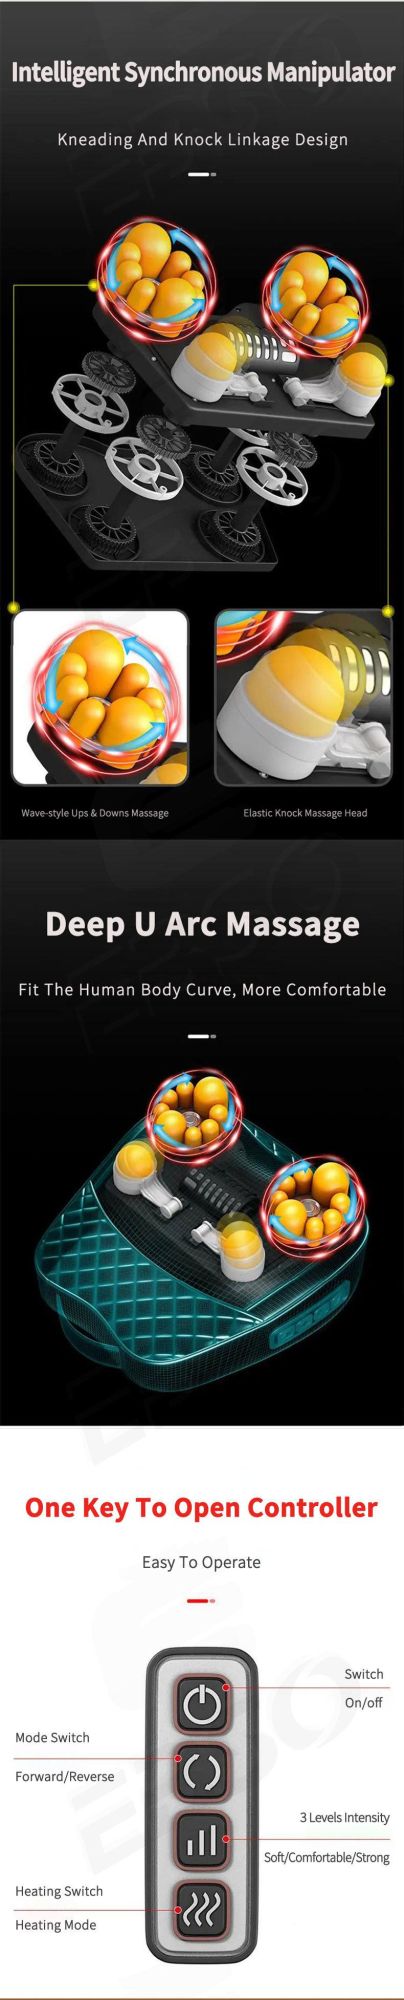 OEM/ODM Electric Full Body Care Shiatsu Masaj Aletleri Thermal Vibration Massage Cushion Pillow Cushion